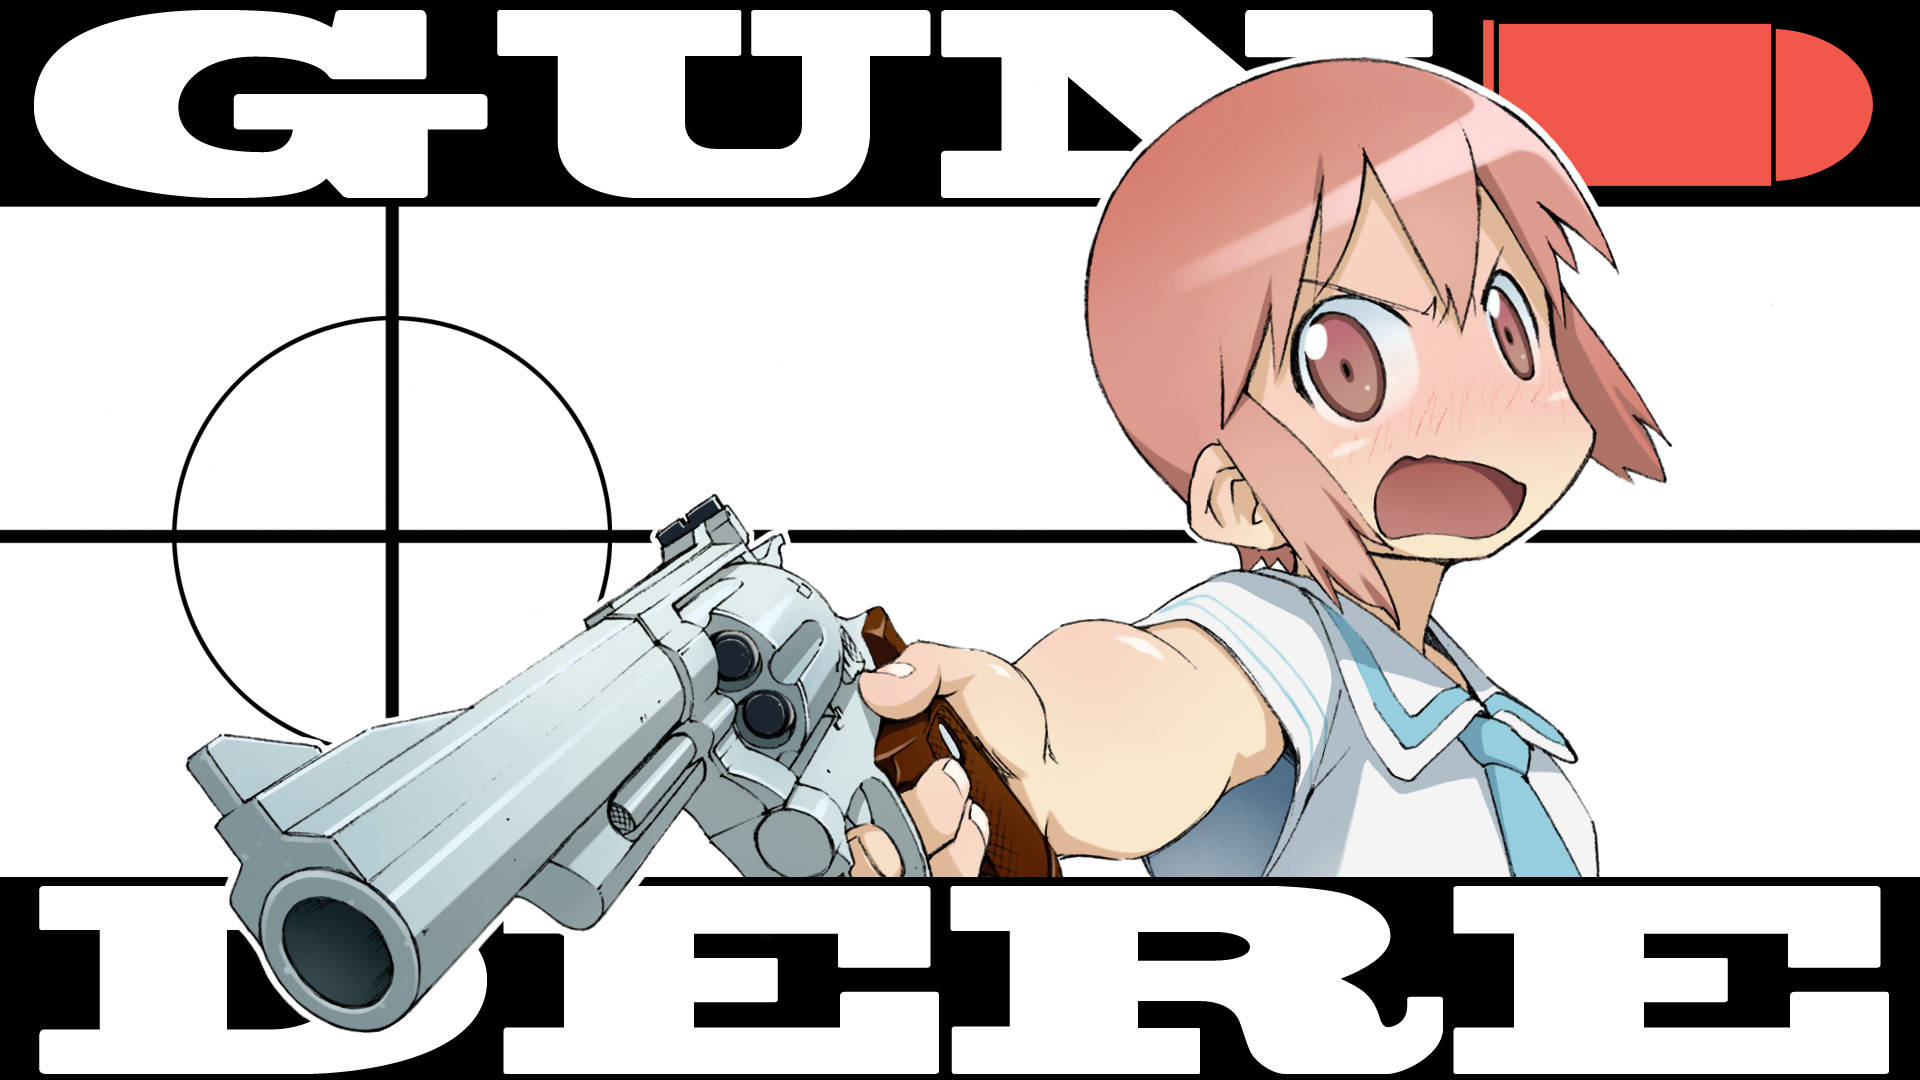 Nichijoumisato Gun Dere Can Be Translated To: 